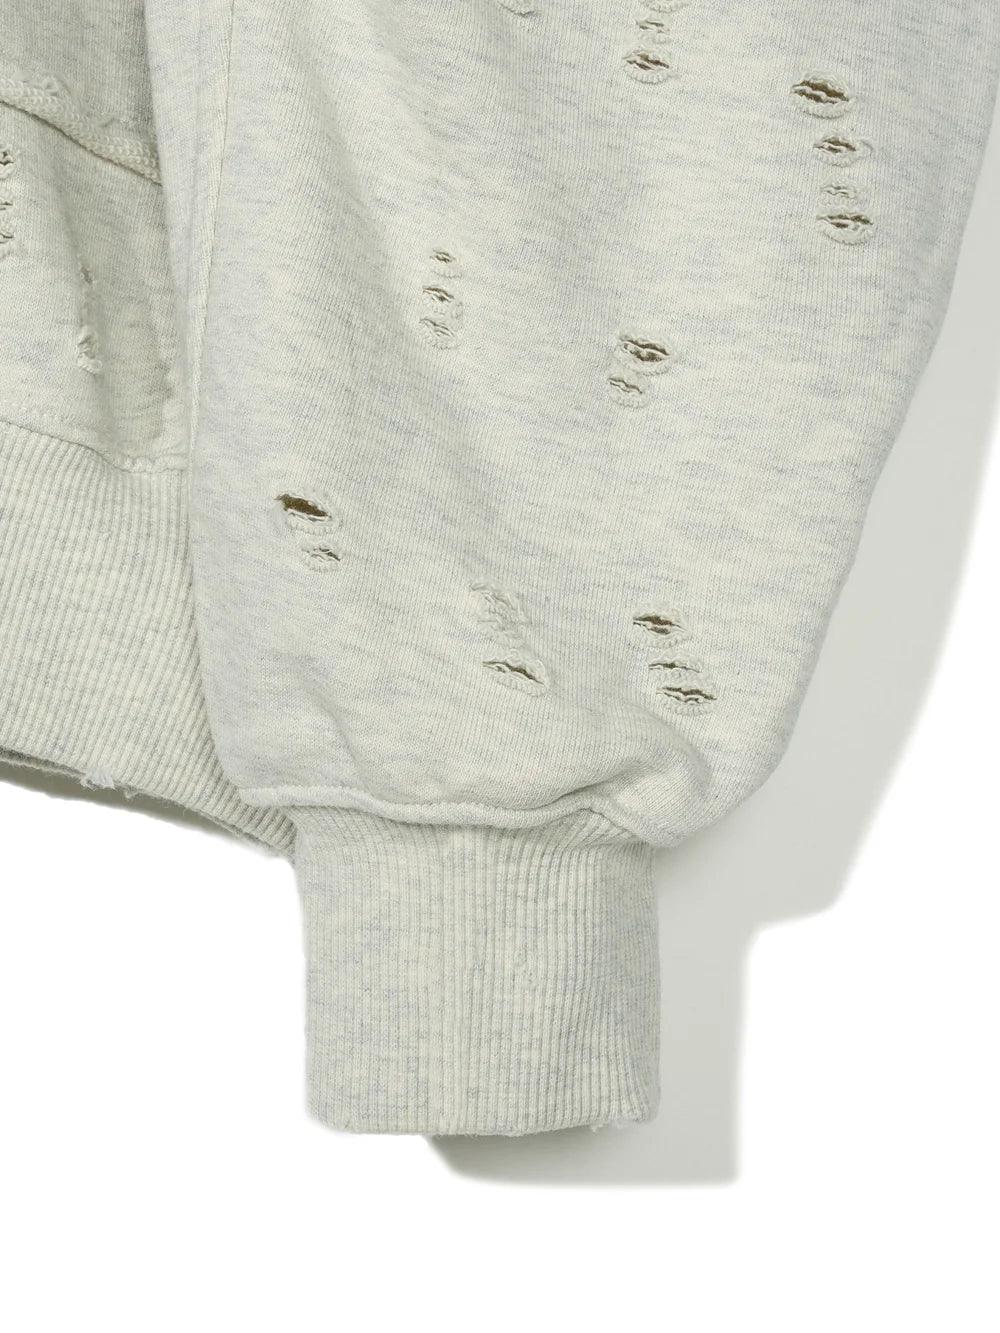 Partimento Destroy Damage Sweatshirt - Light Melange Gray -